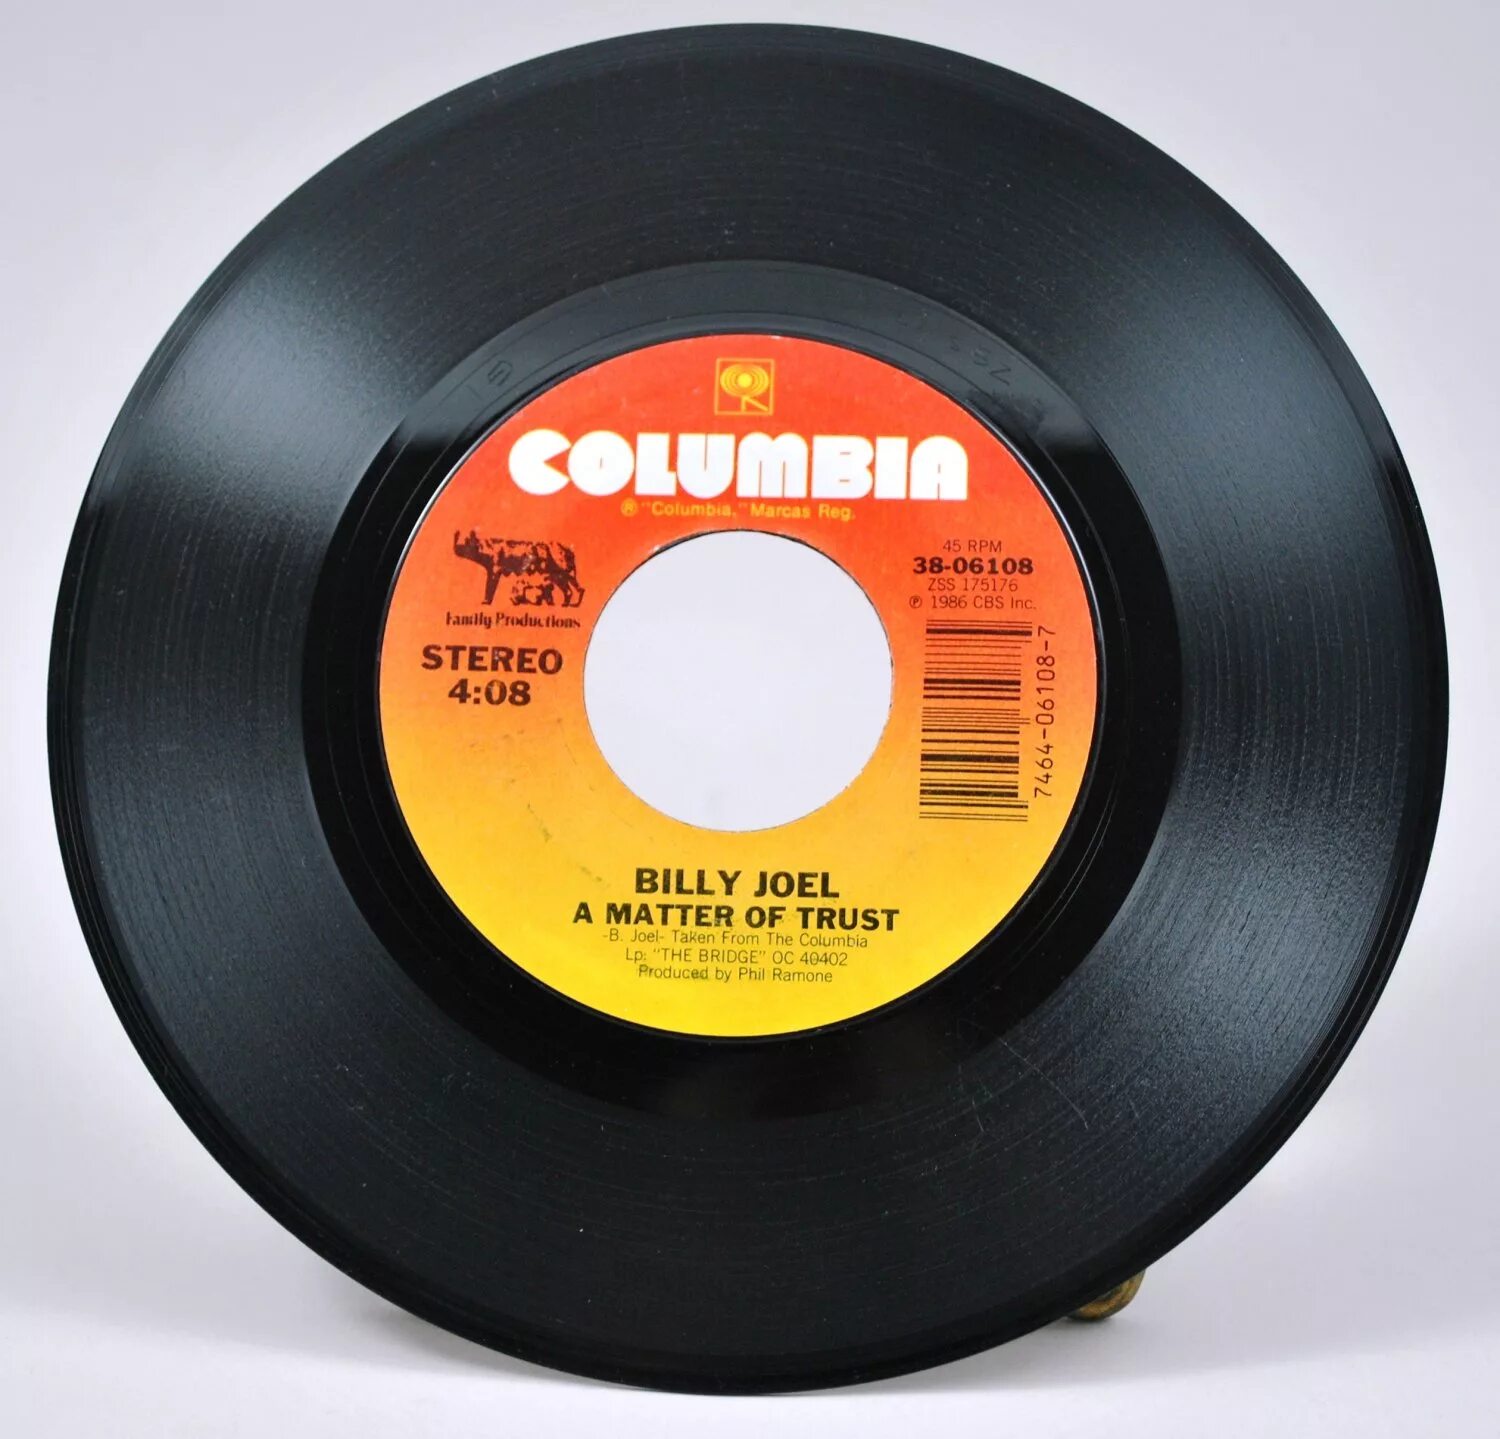 Matter of trust joel. 45 RPM винил. Пластинка 45 RPM 180 gr. Vinyl record 45 RPM. Пластинка сингл.